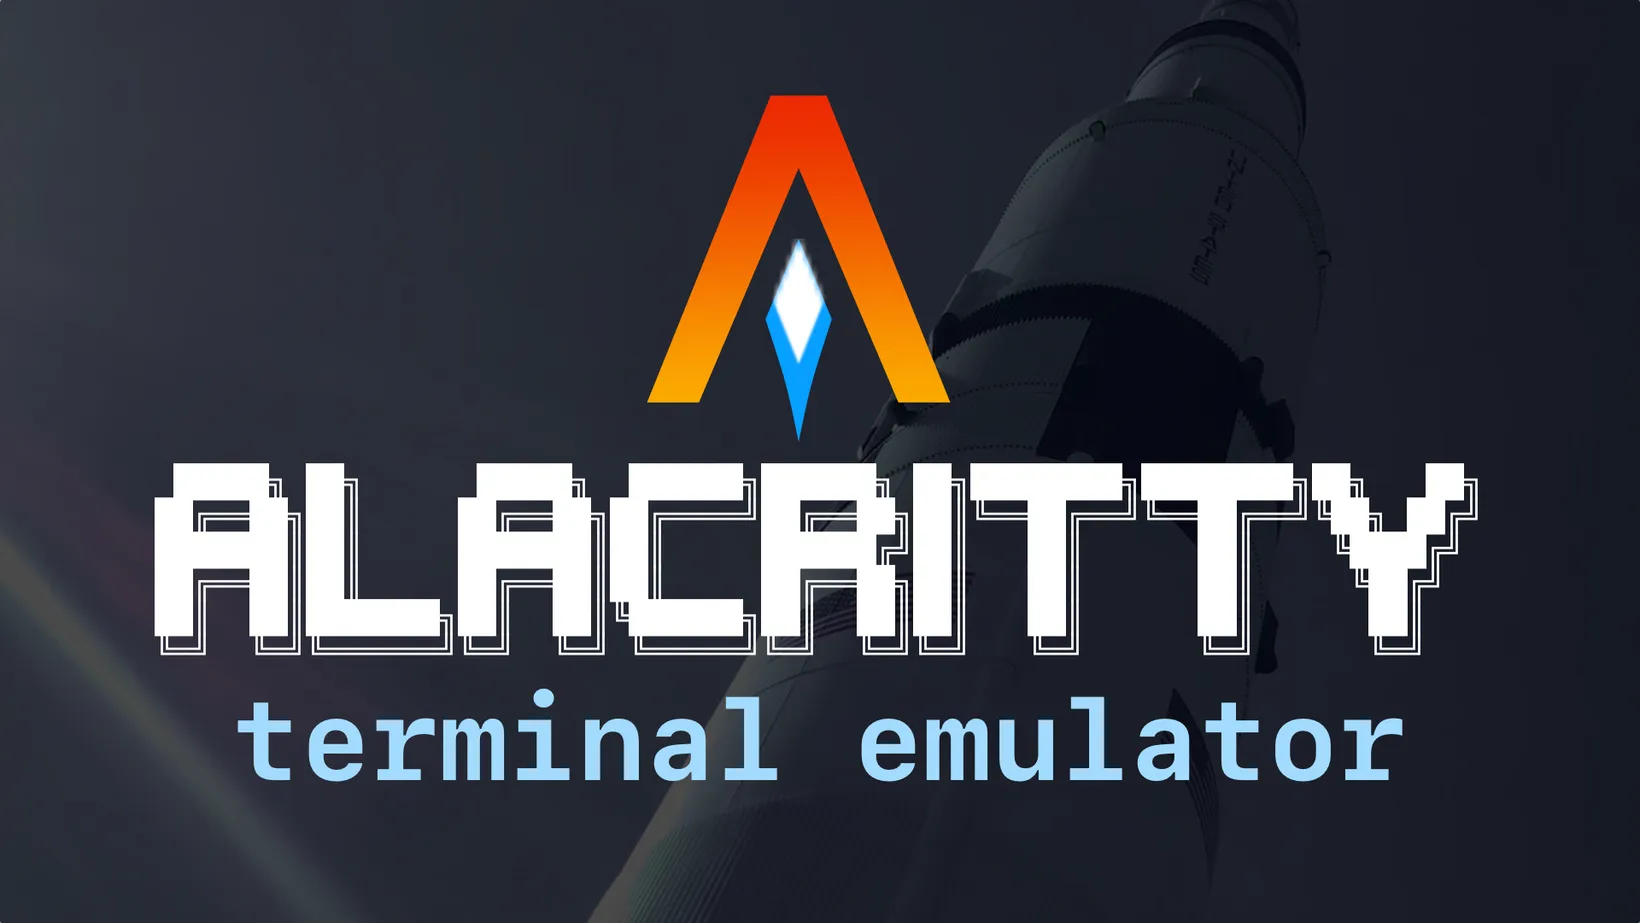 Set up Alacritty for a fast, minimal, terminal emulator hero